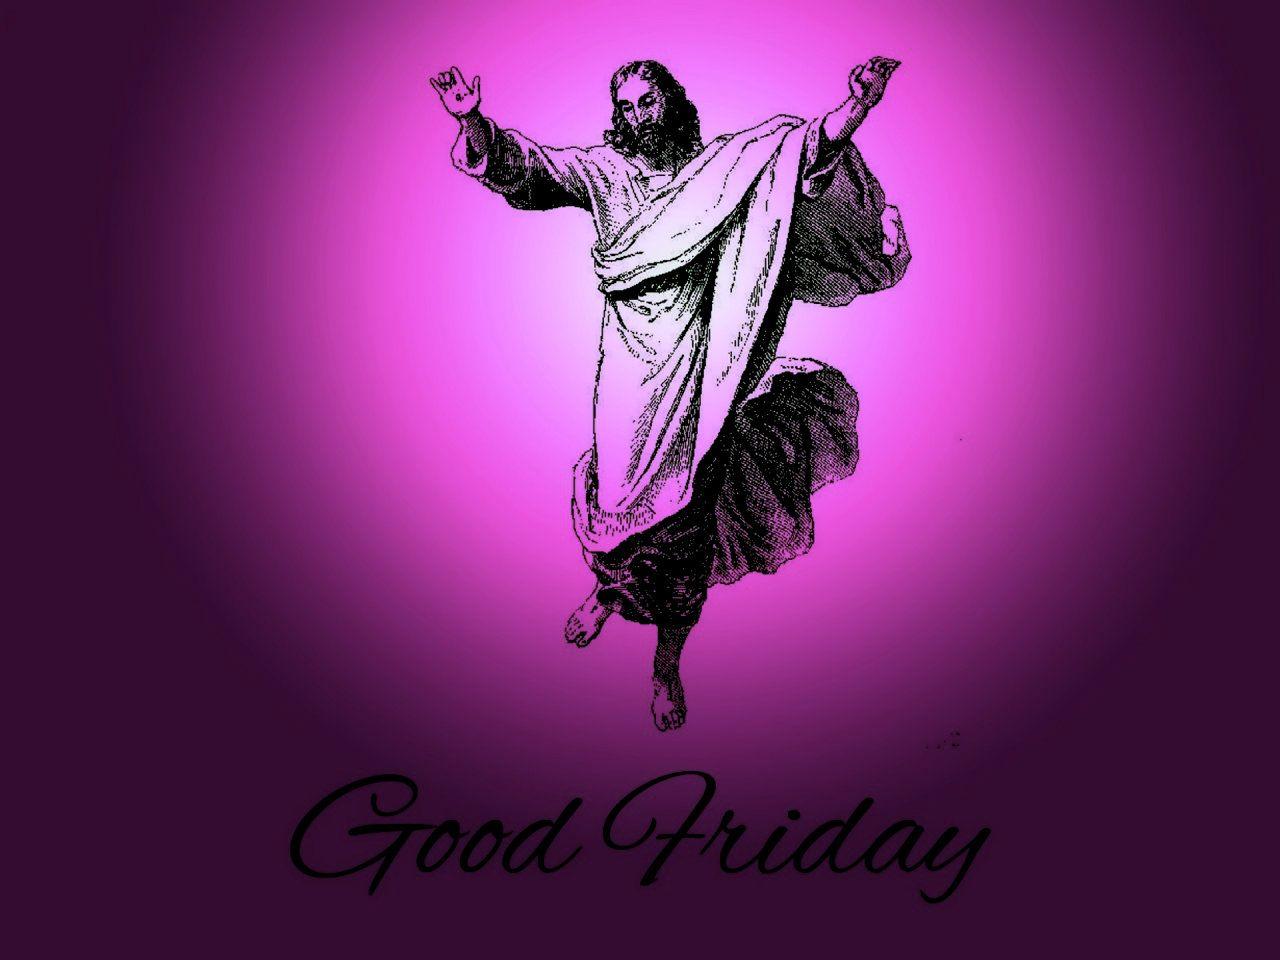 Good Friday HD Image & Wallpaper (Free Download)